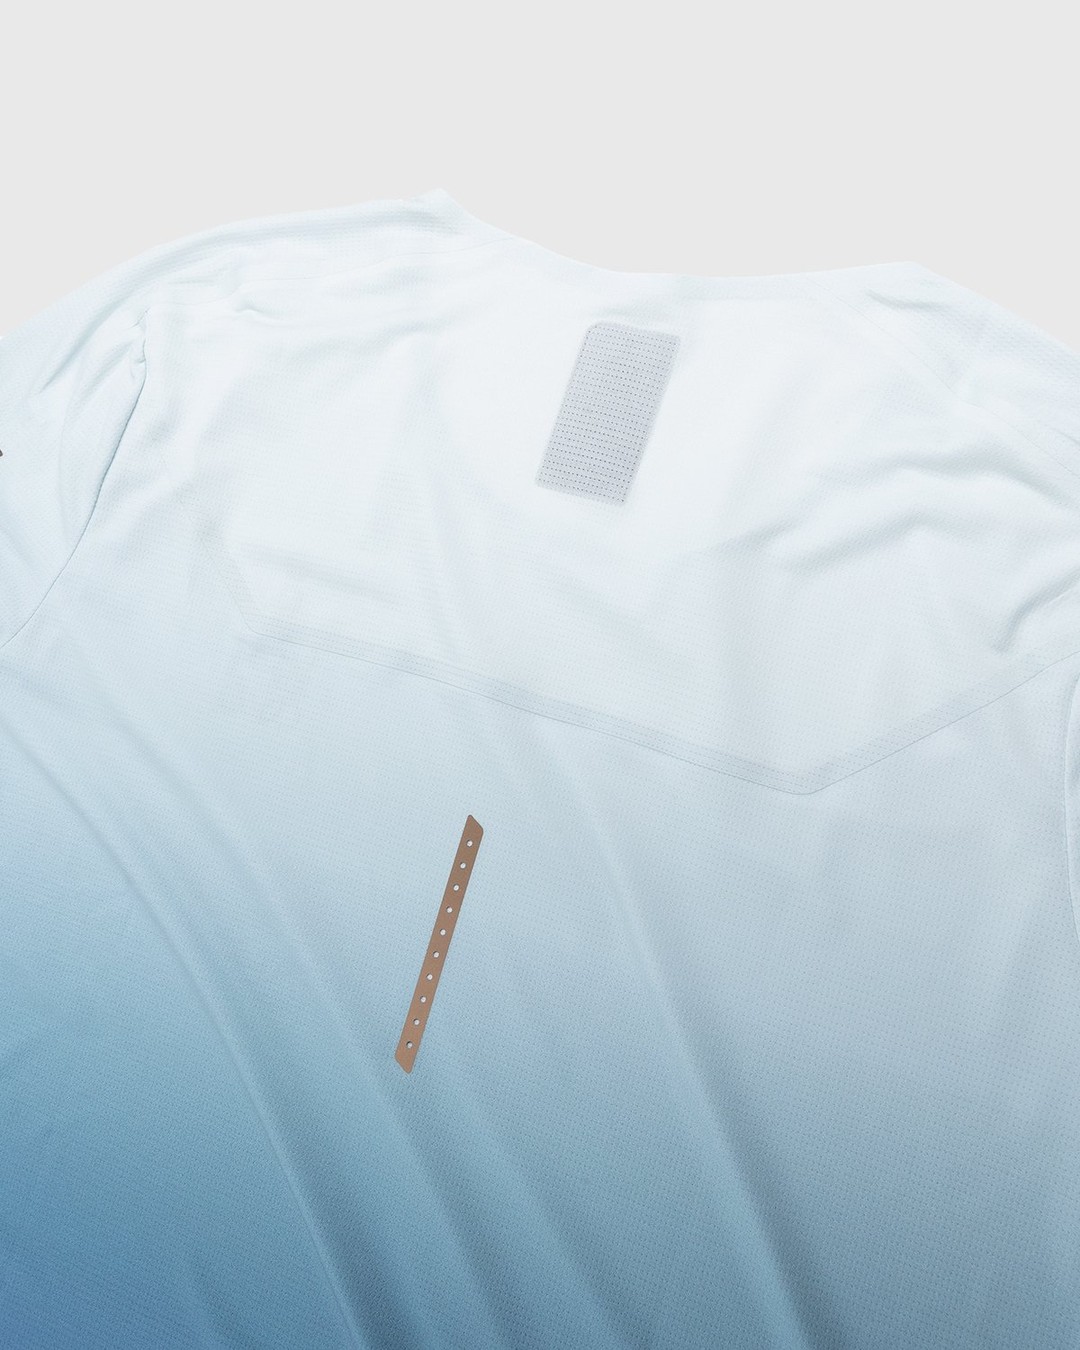 Loewe x On – Women's Performance T-Shirt Gradient Grey - T-Shirts - Blue - Image 3